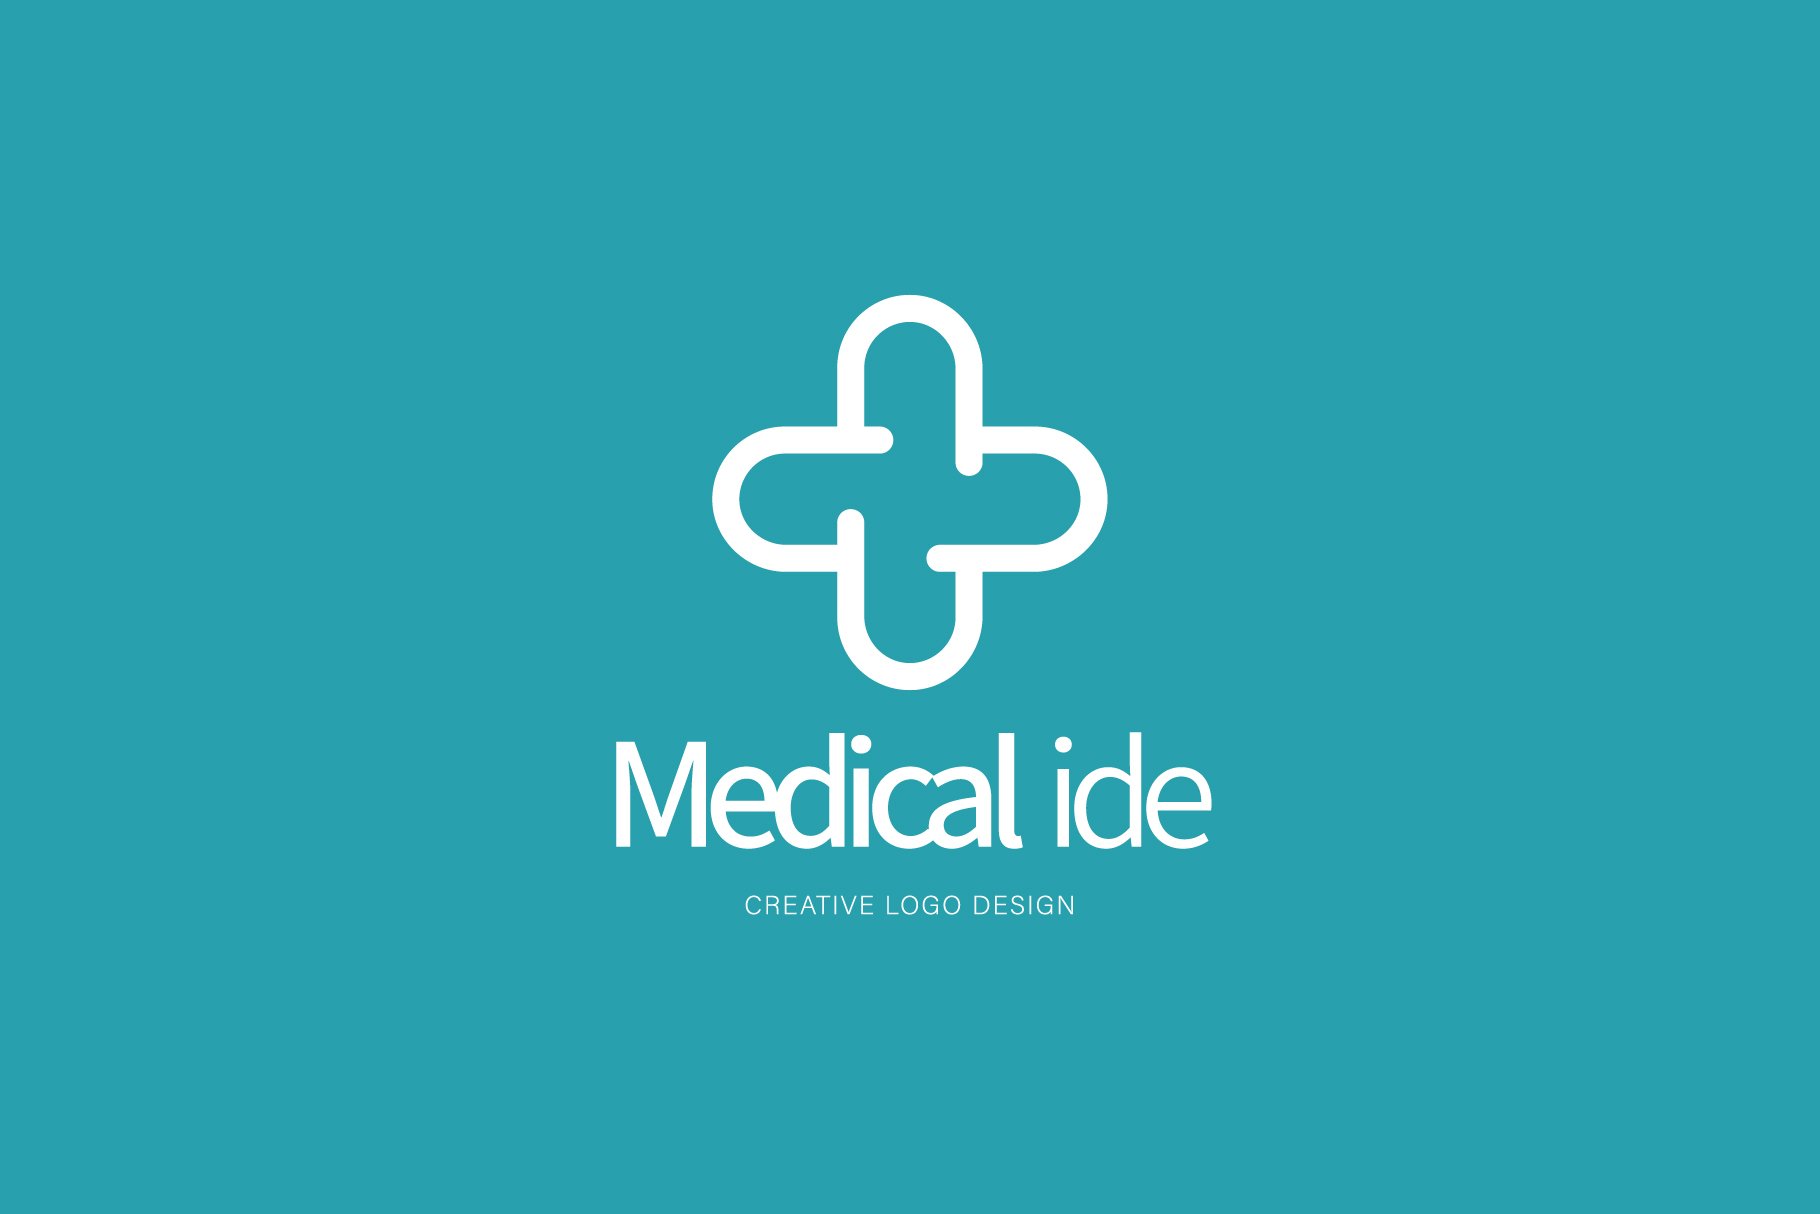 medical logo preview image.